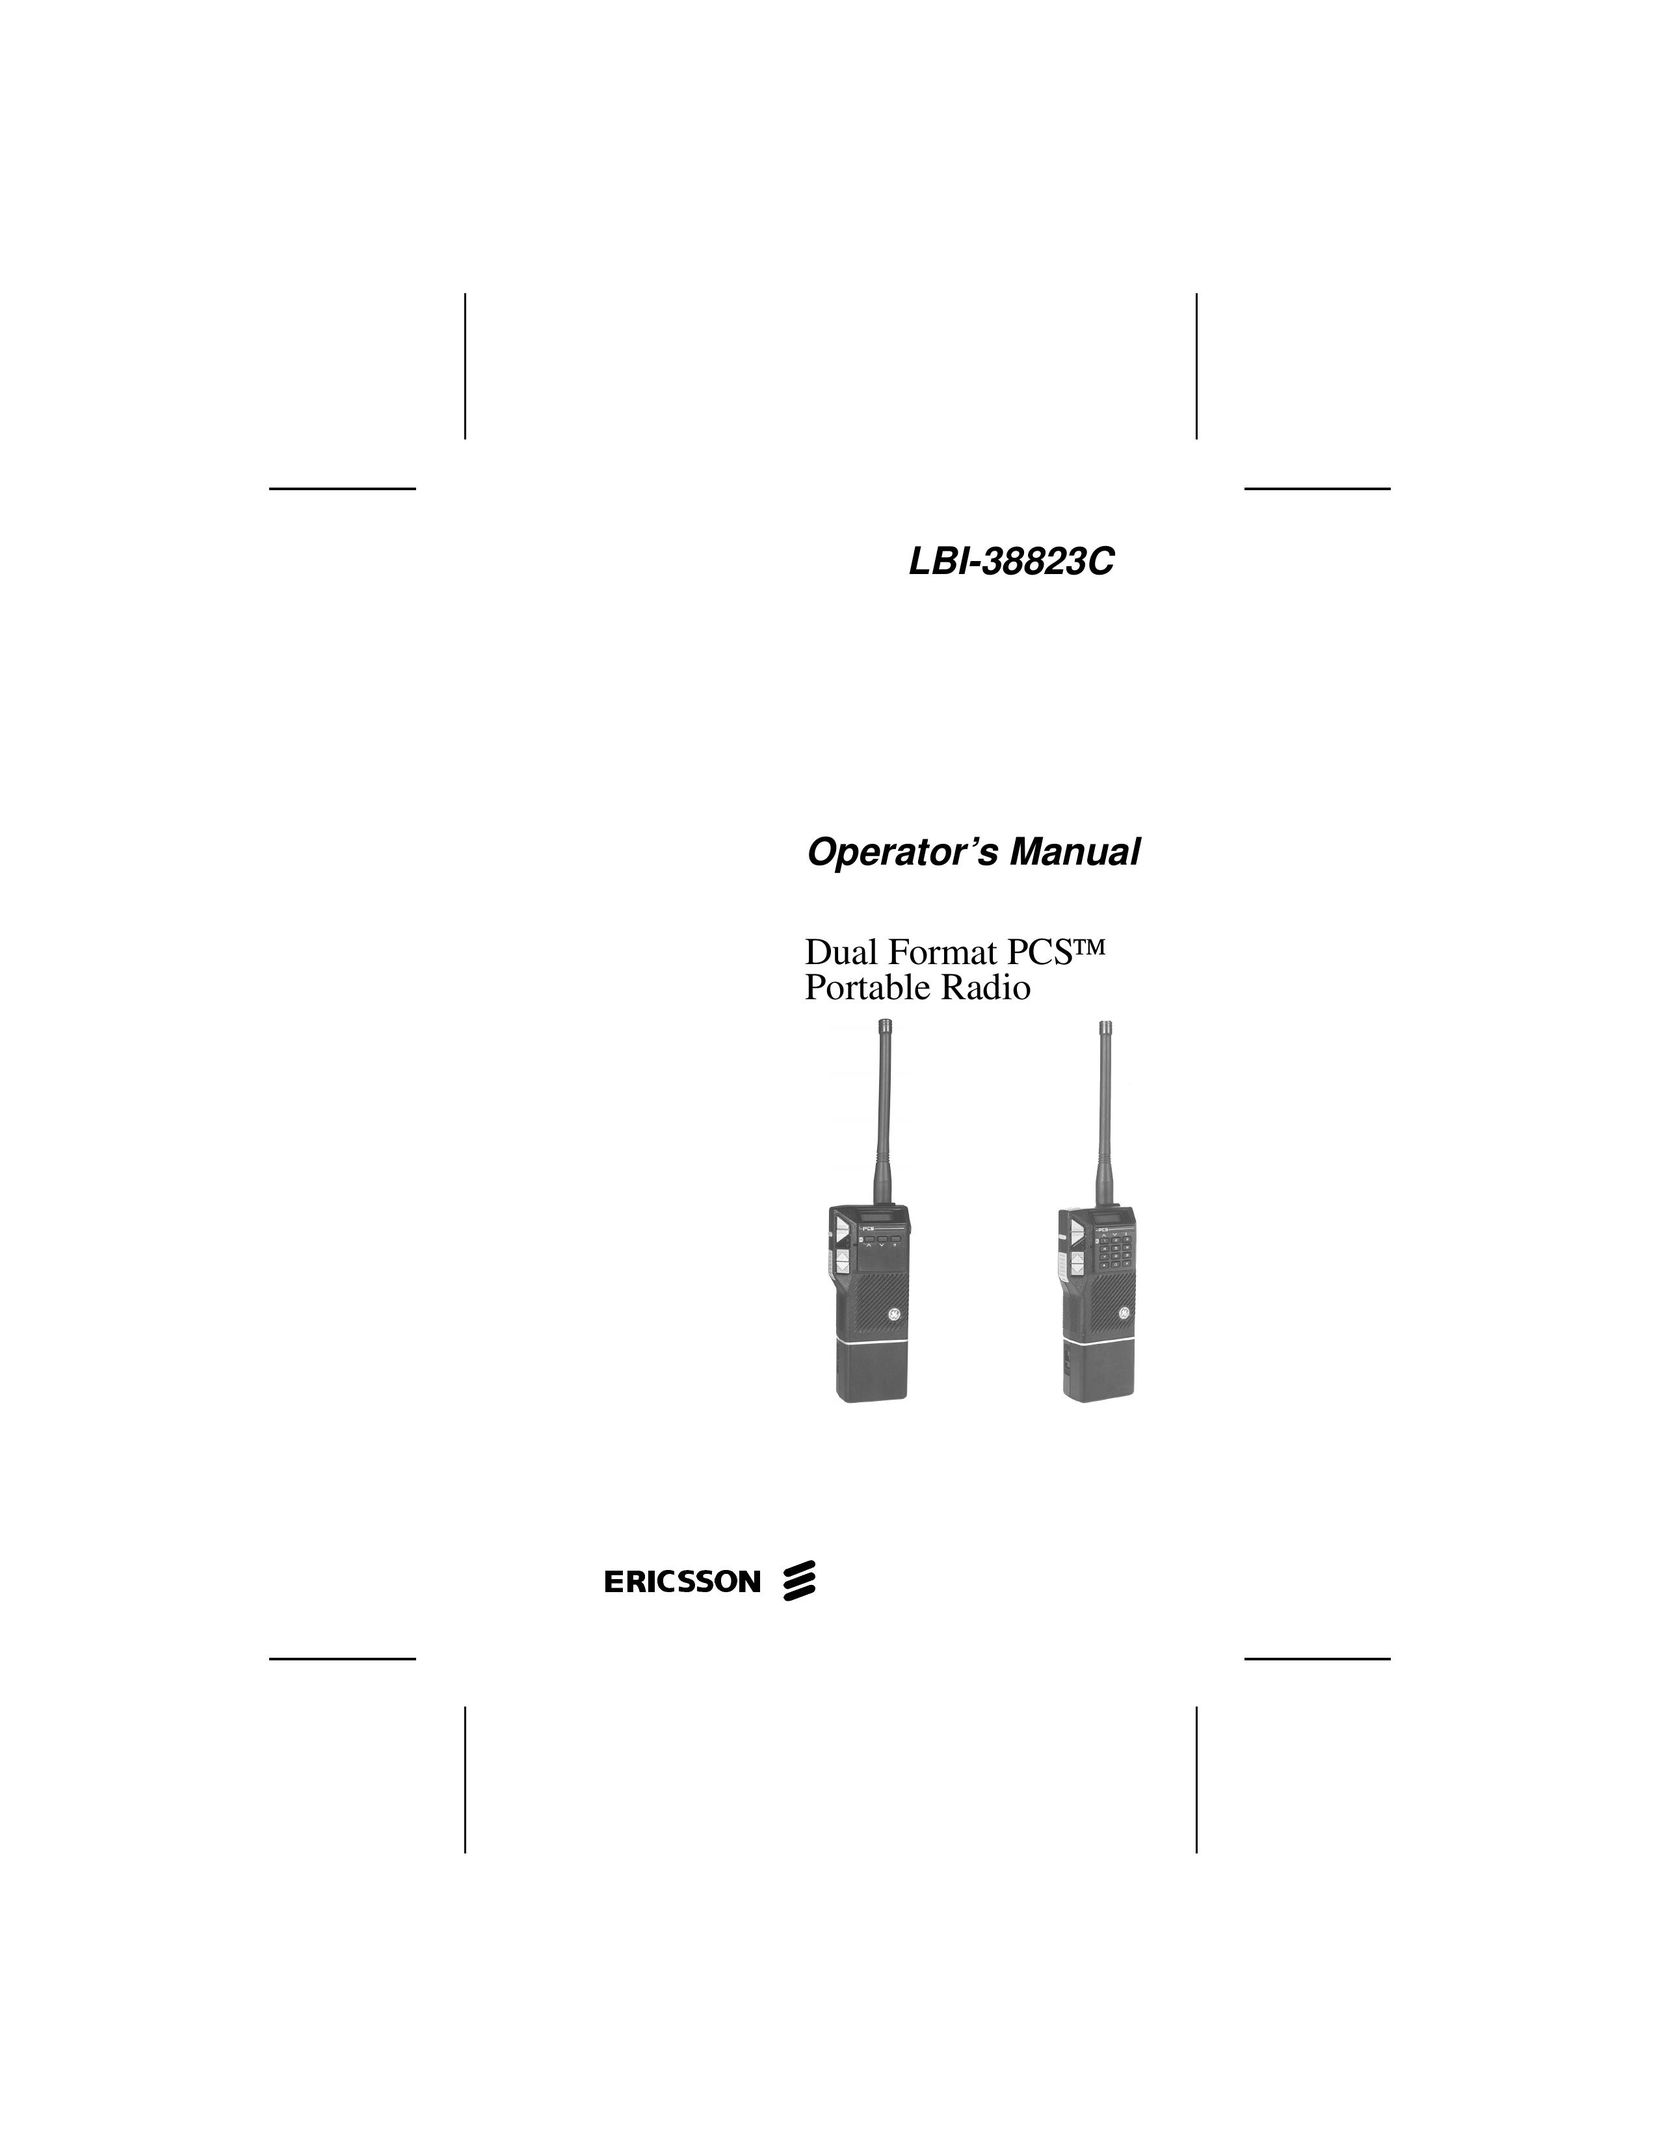 Ericsson LBI-38823C Portable Radio User Manual